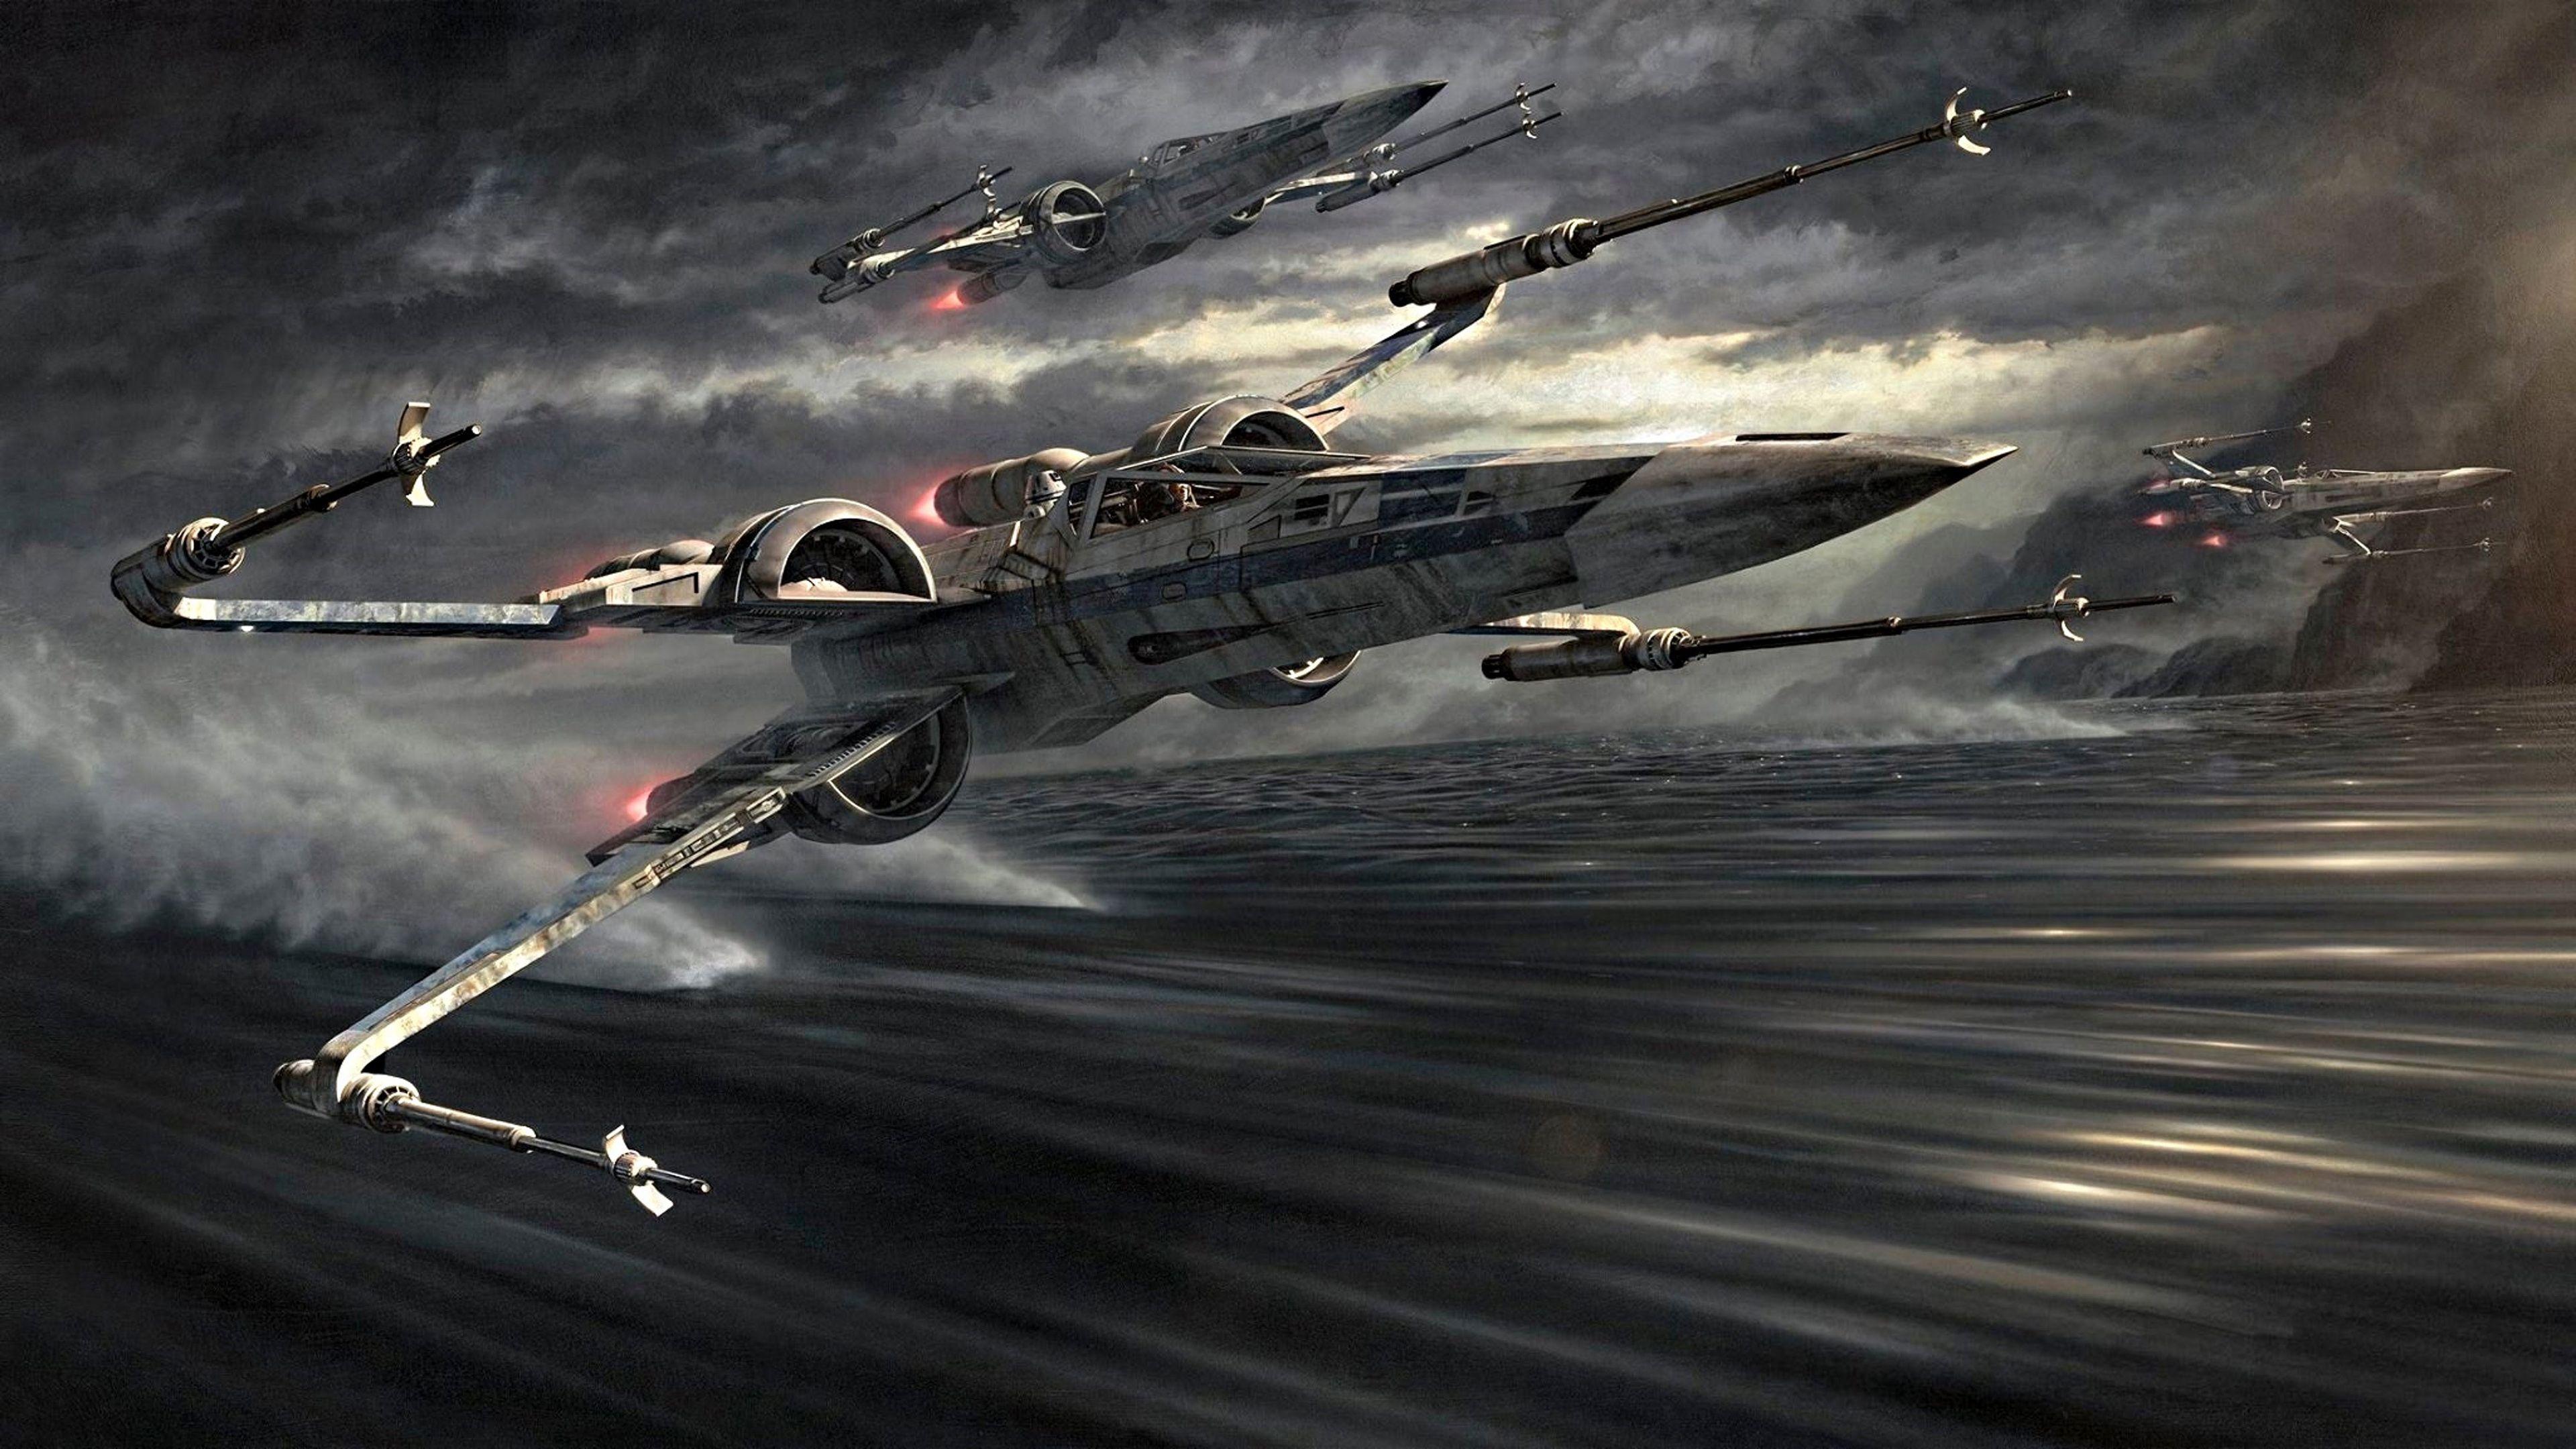 Star Wars Art Wallpapers - Top Free Star Wars Art Backgrounds